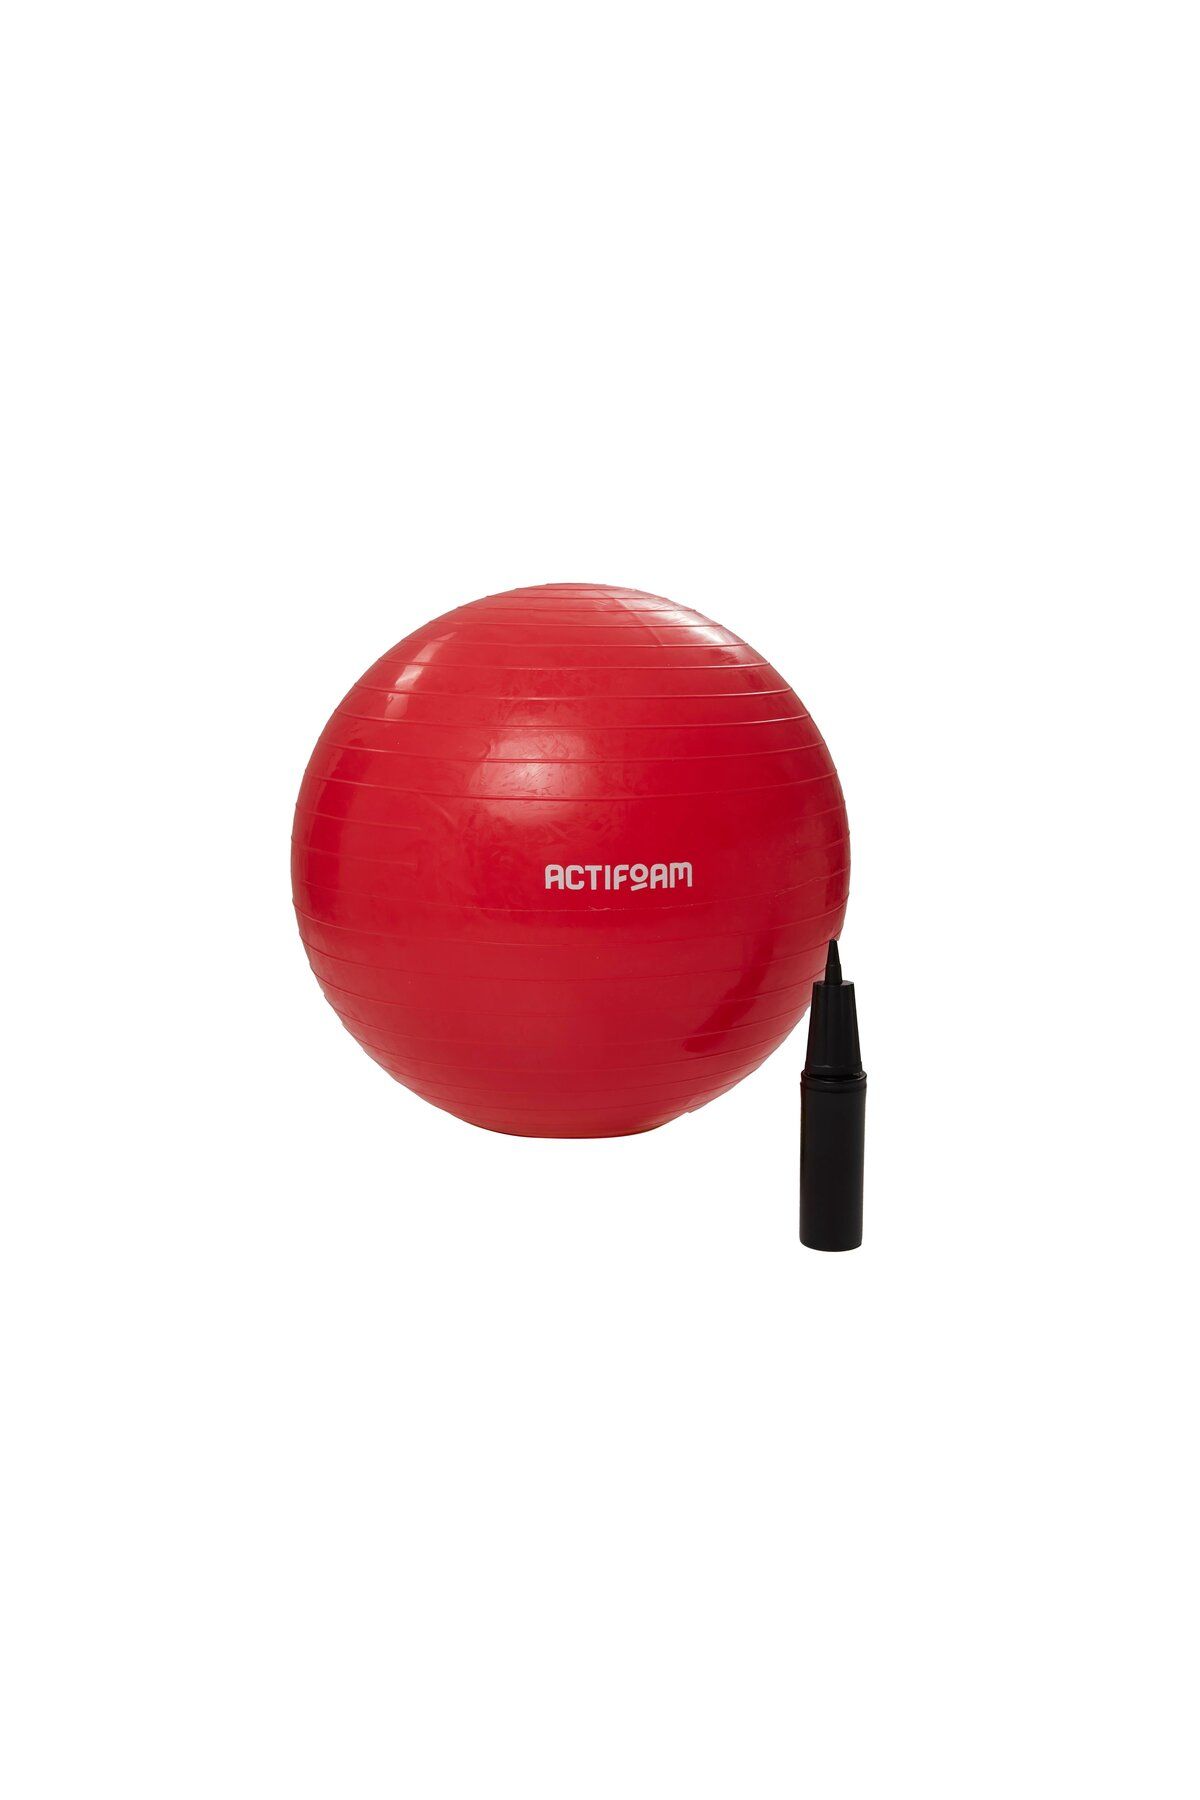 Actifoam Pilates Topu - Kırmızı Renk 55cm